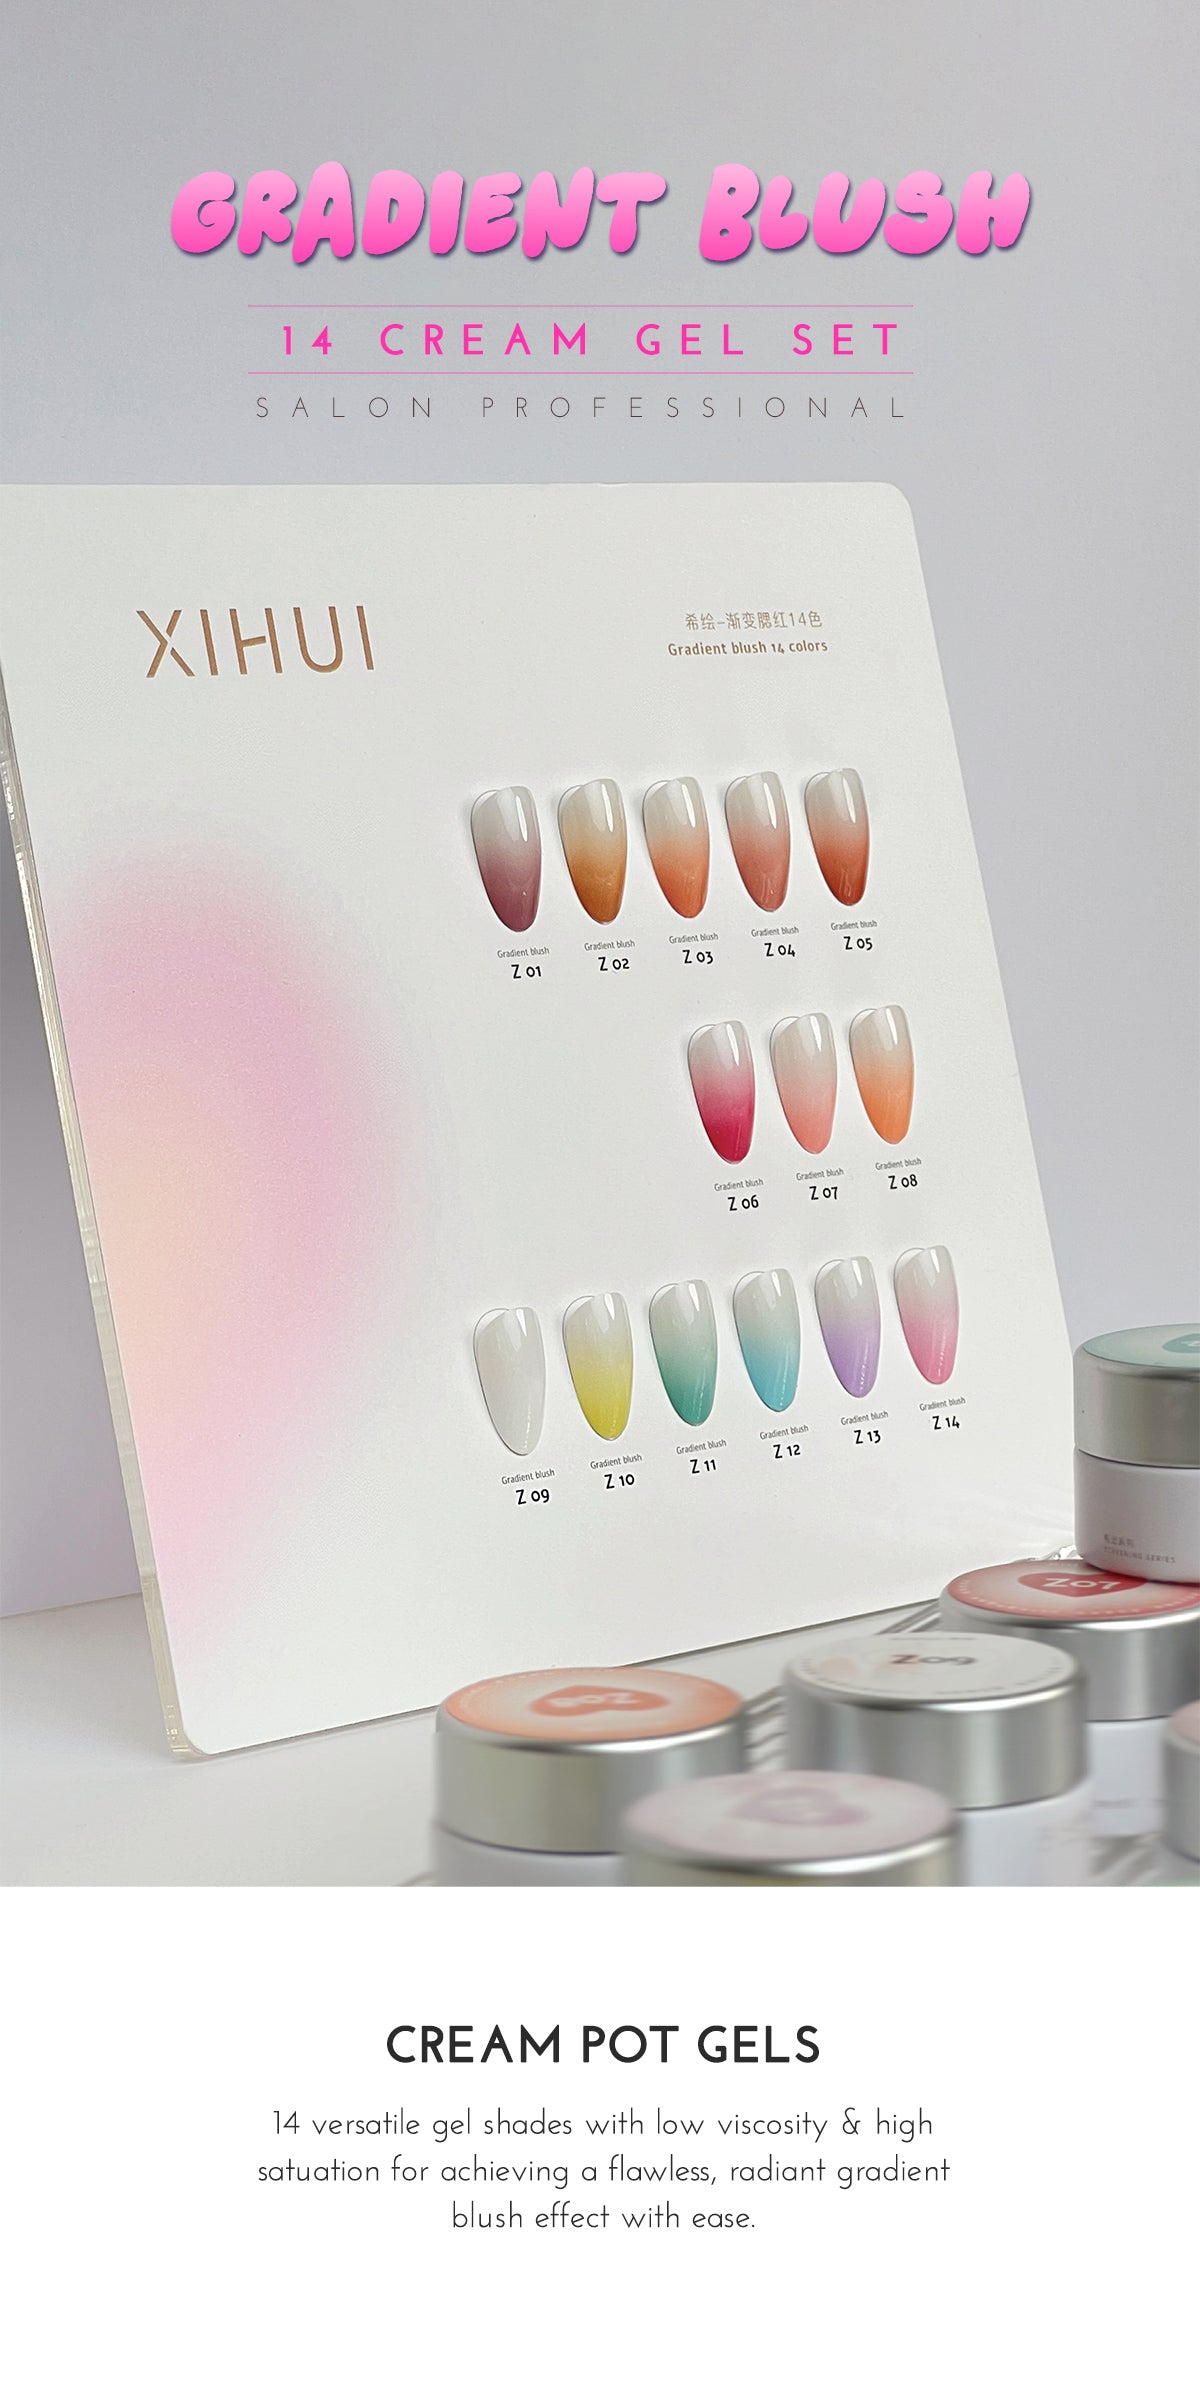 Xi Hui Gradient Blush Collection Lookbook